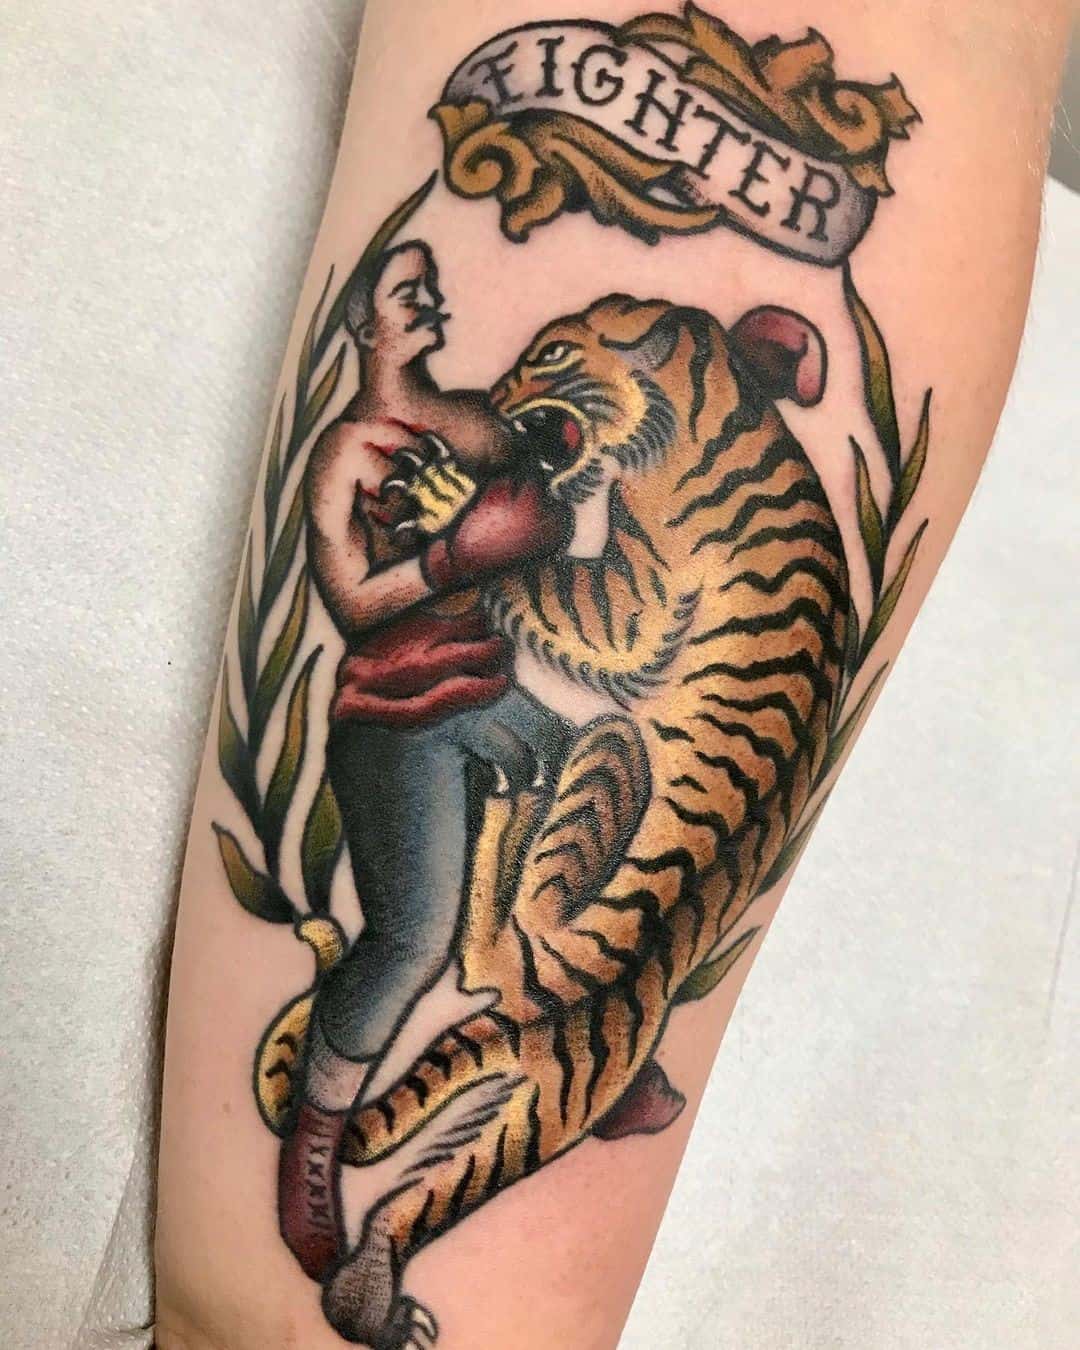 Tiger Hand Tattoo Fighter Inspired Idea